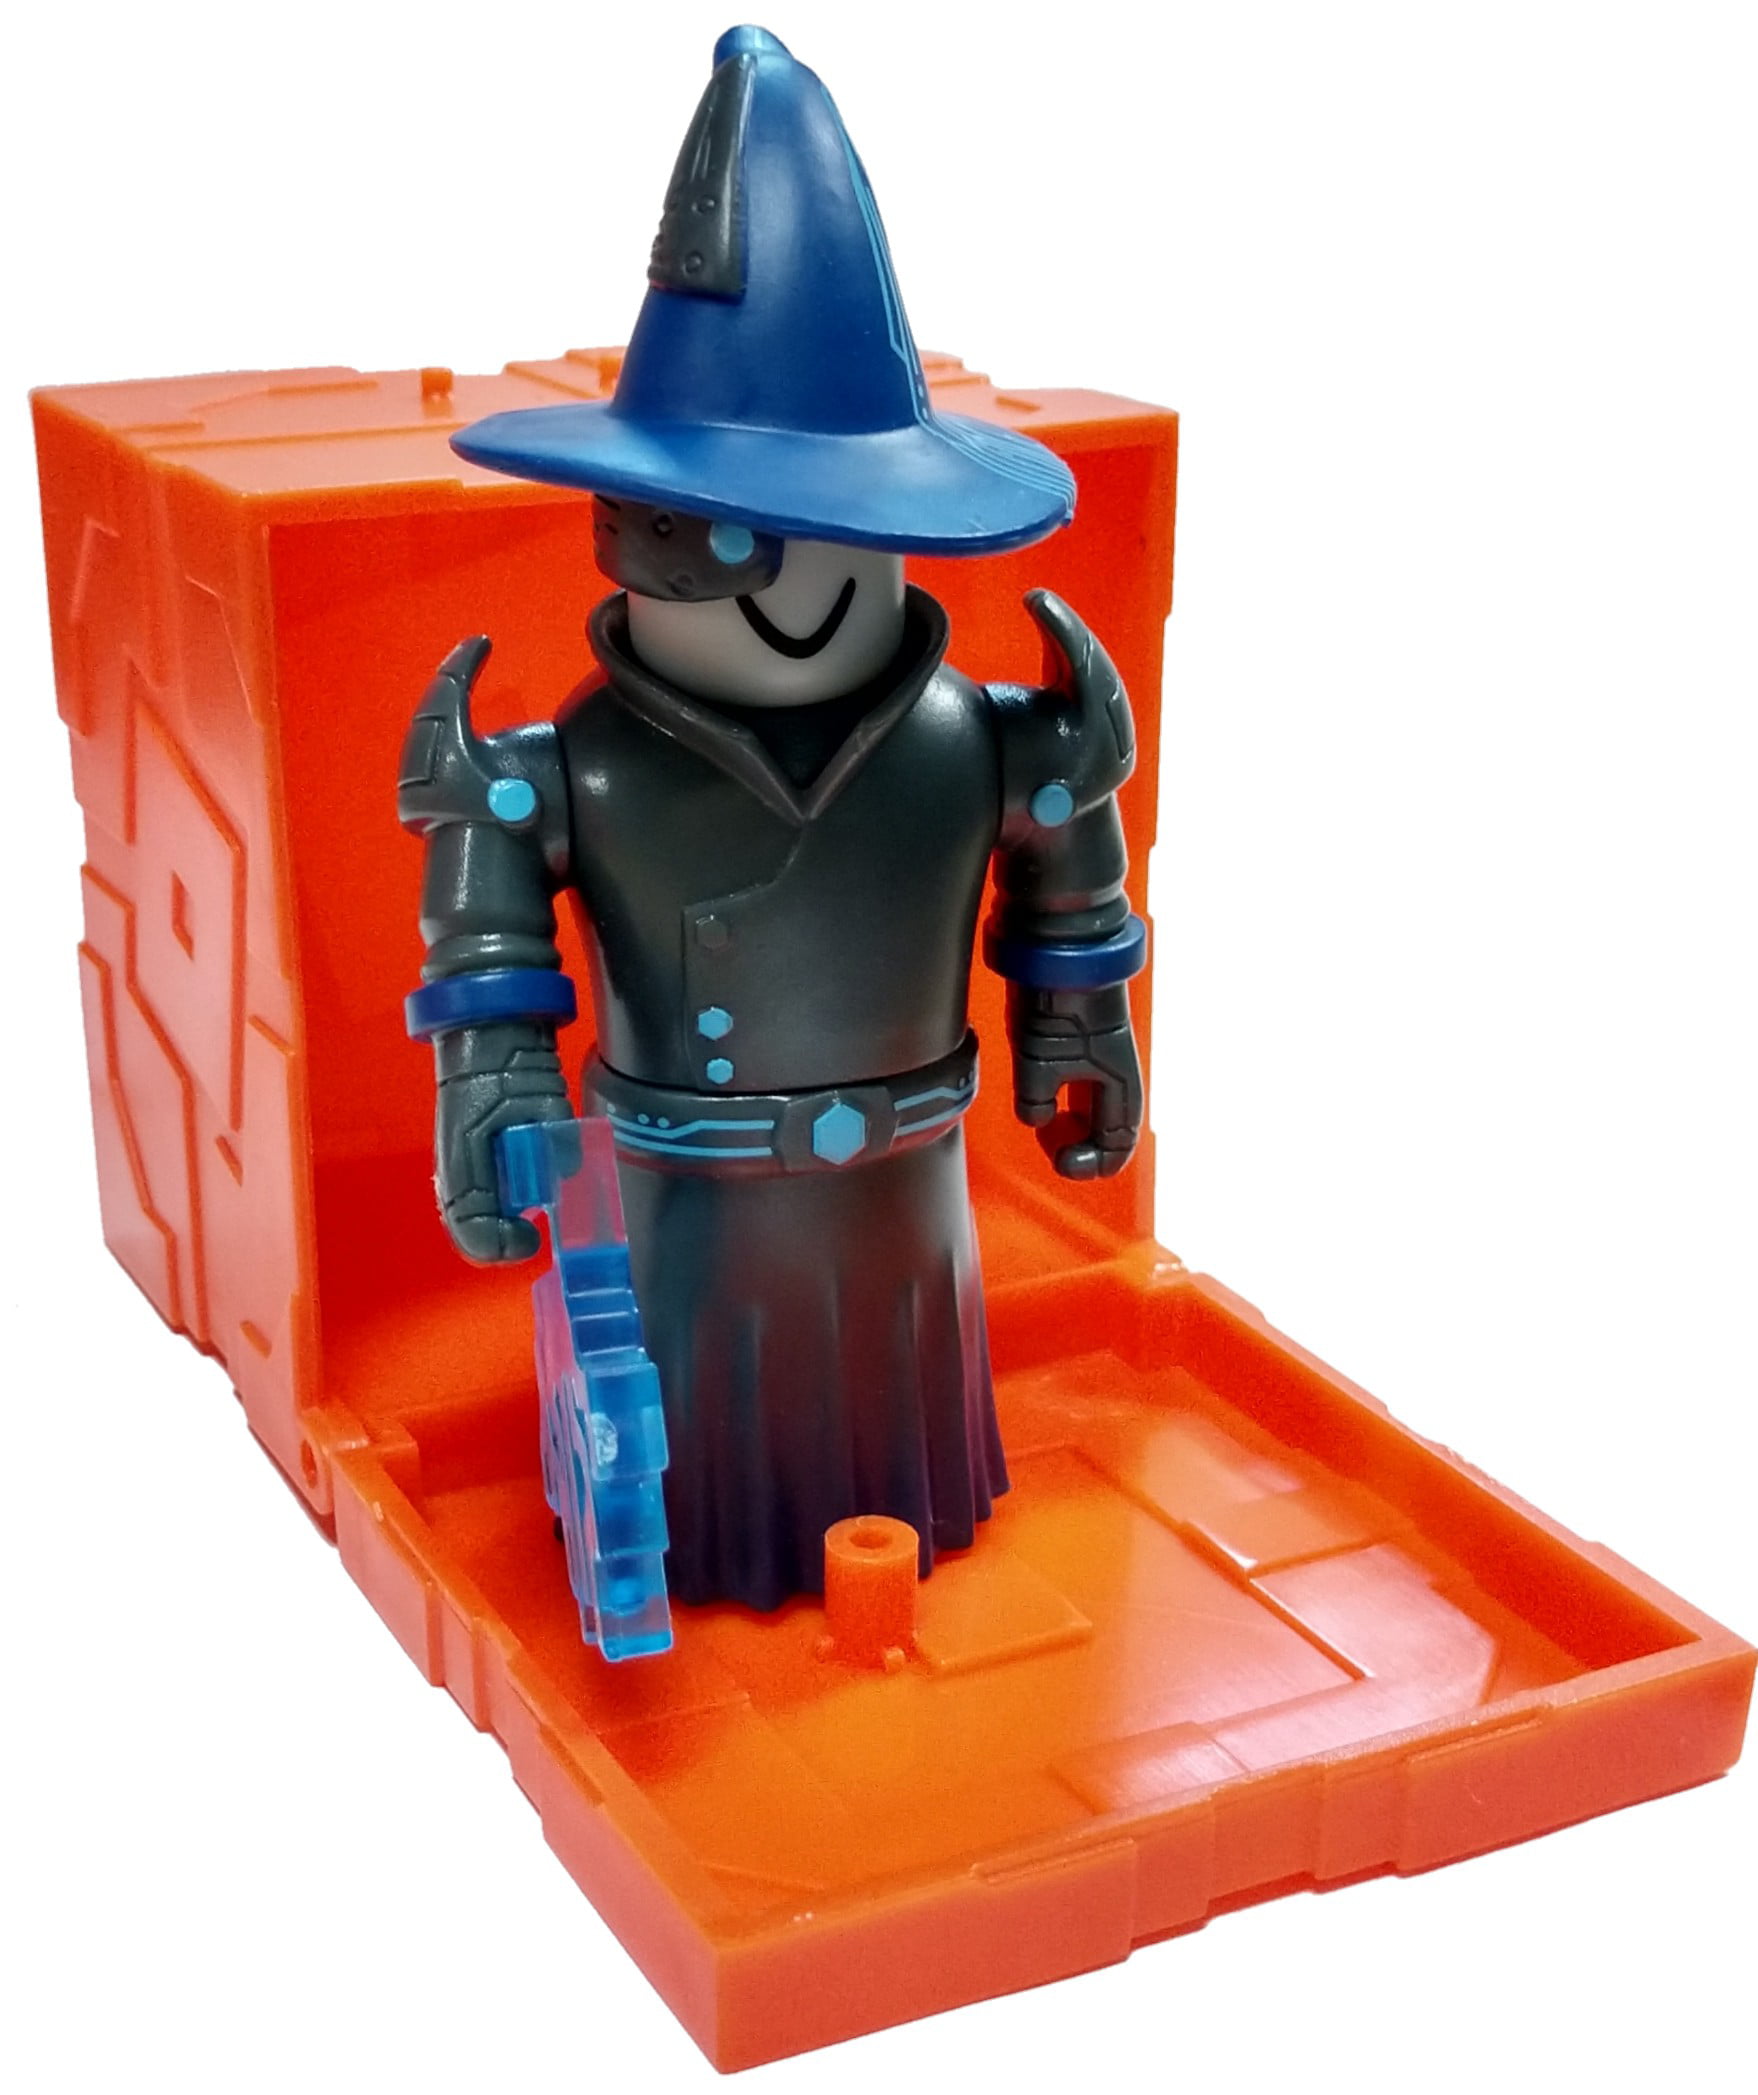 Roblox Series 6 Techno Wizard Mini Figure With Orange Cube And Online Code No Packaging Walmart Com Walmart Com